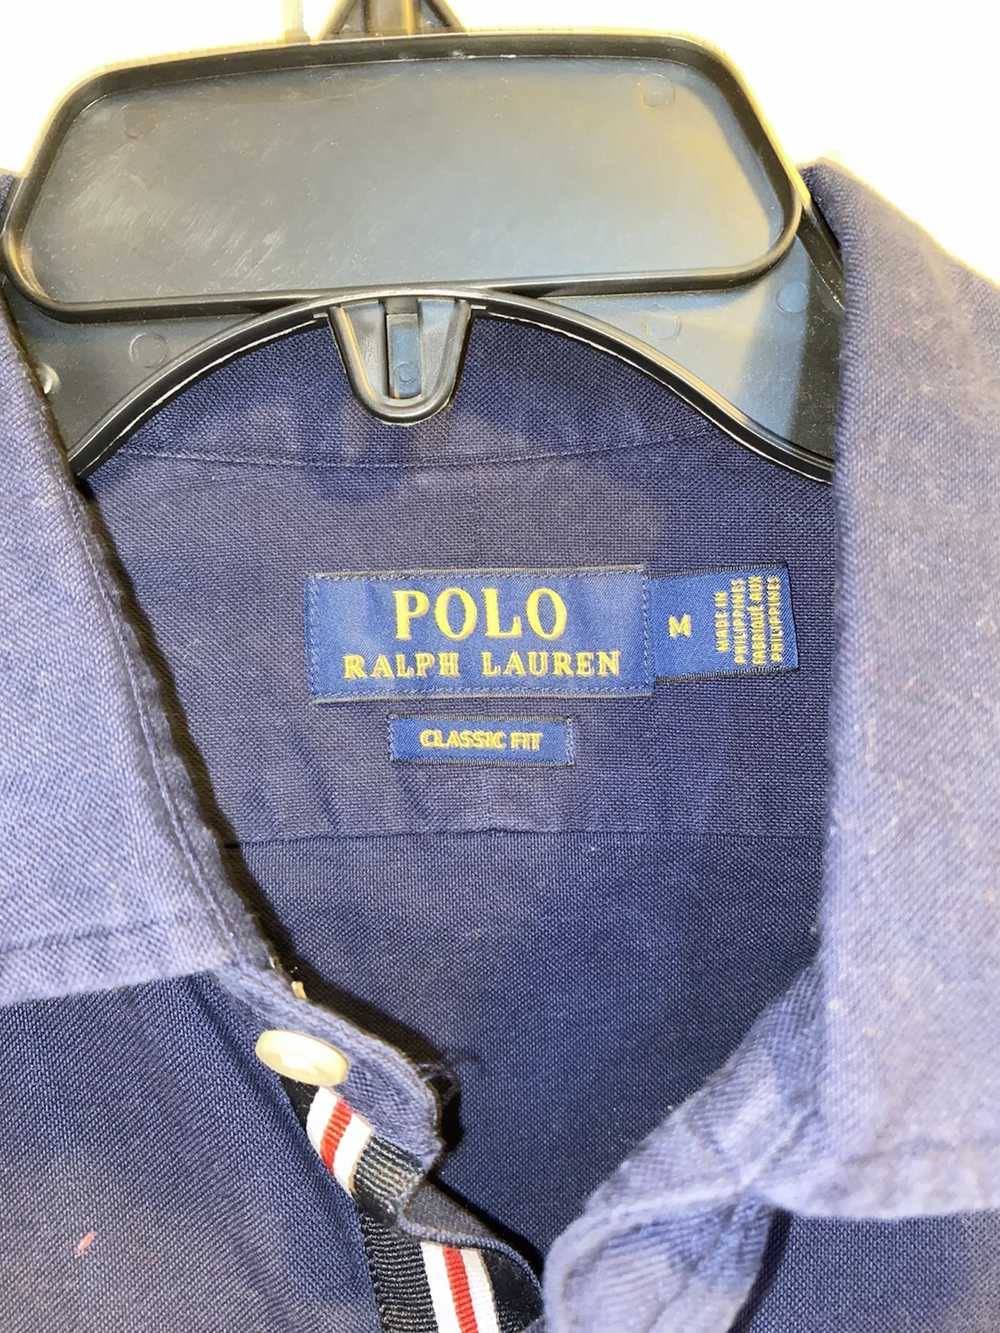 Polo Ralph Lauren Polo Ralph Lauren Button Up - image 2